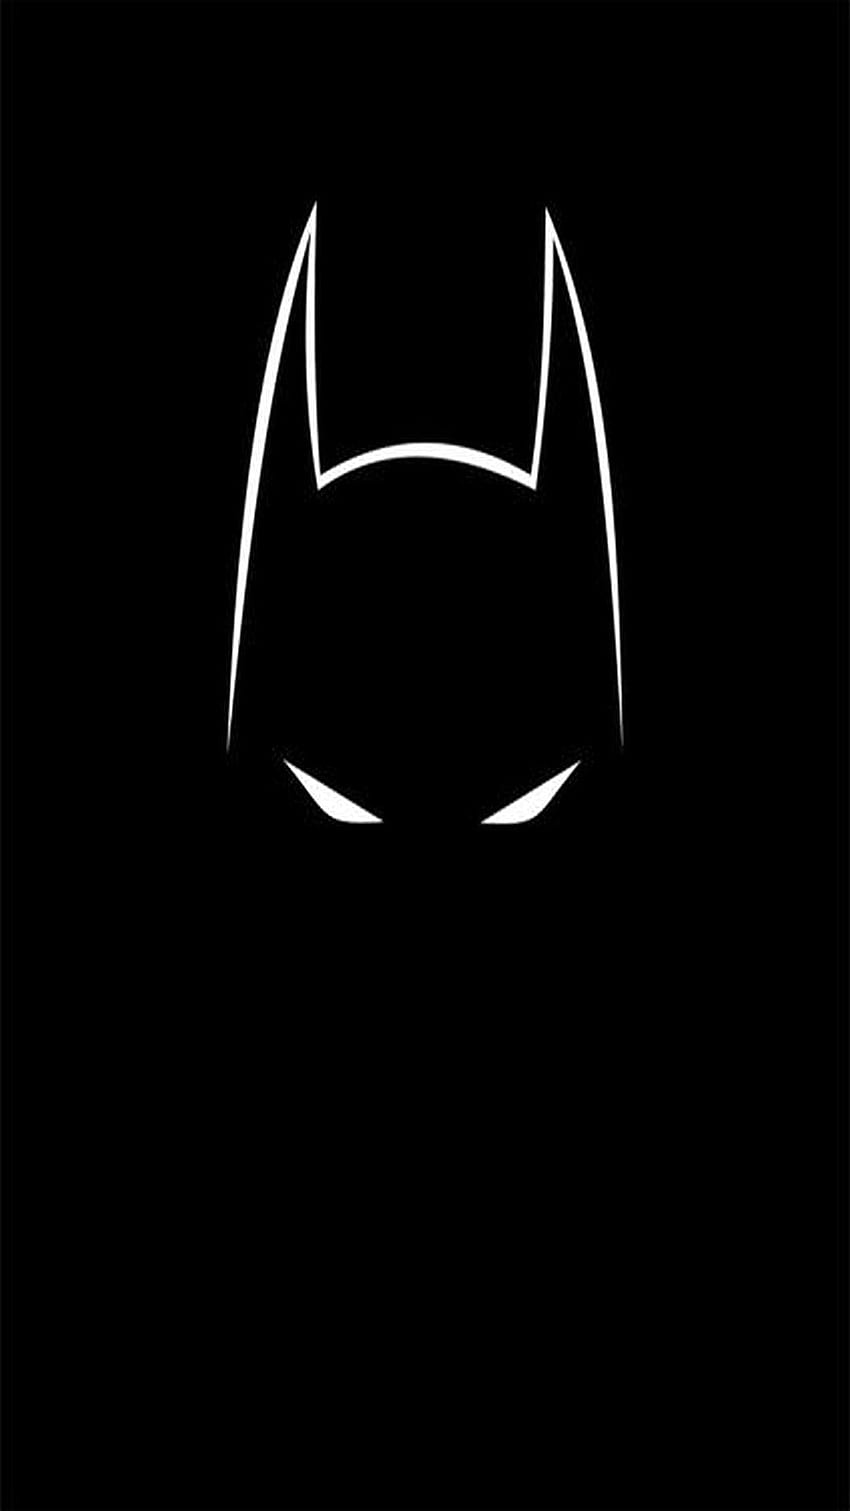 Batman logo black HD wallpapers